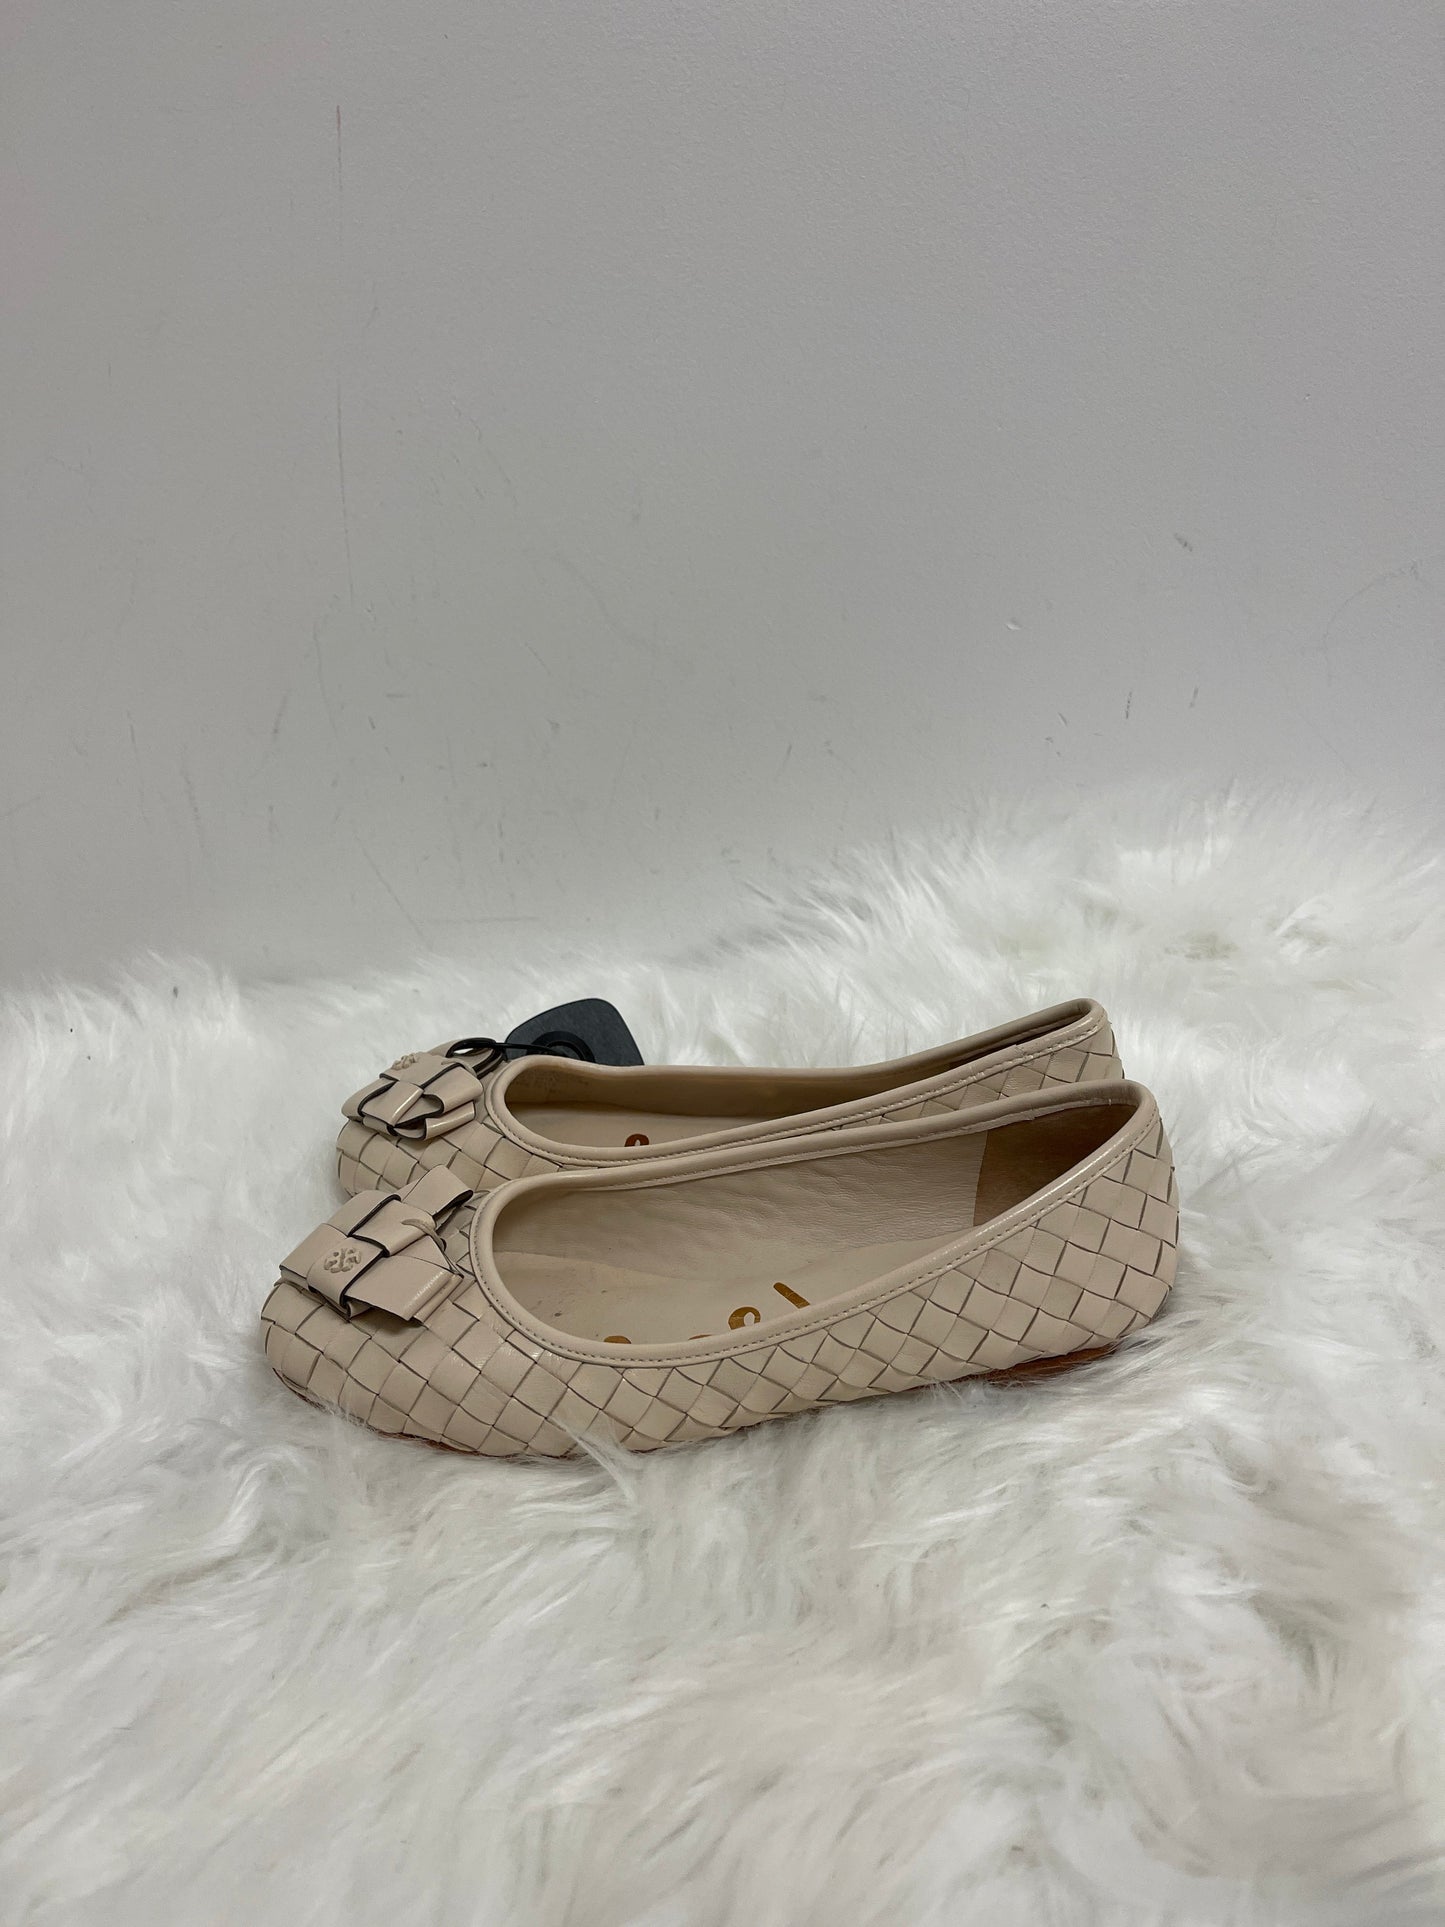 Cream Shoes Designer Tory Burch, Size 6.5